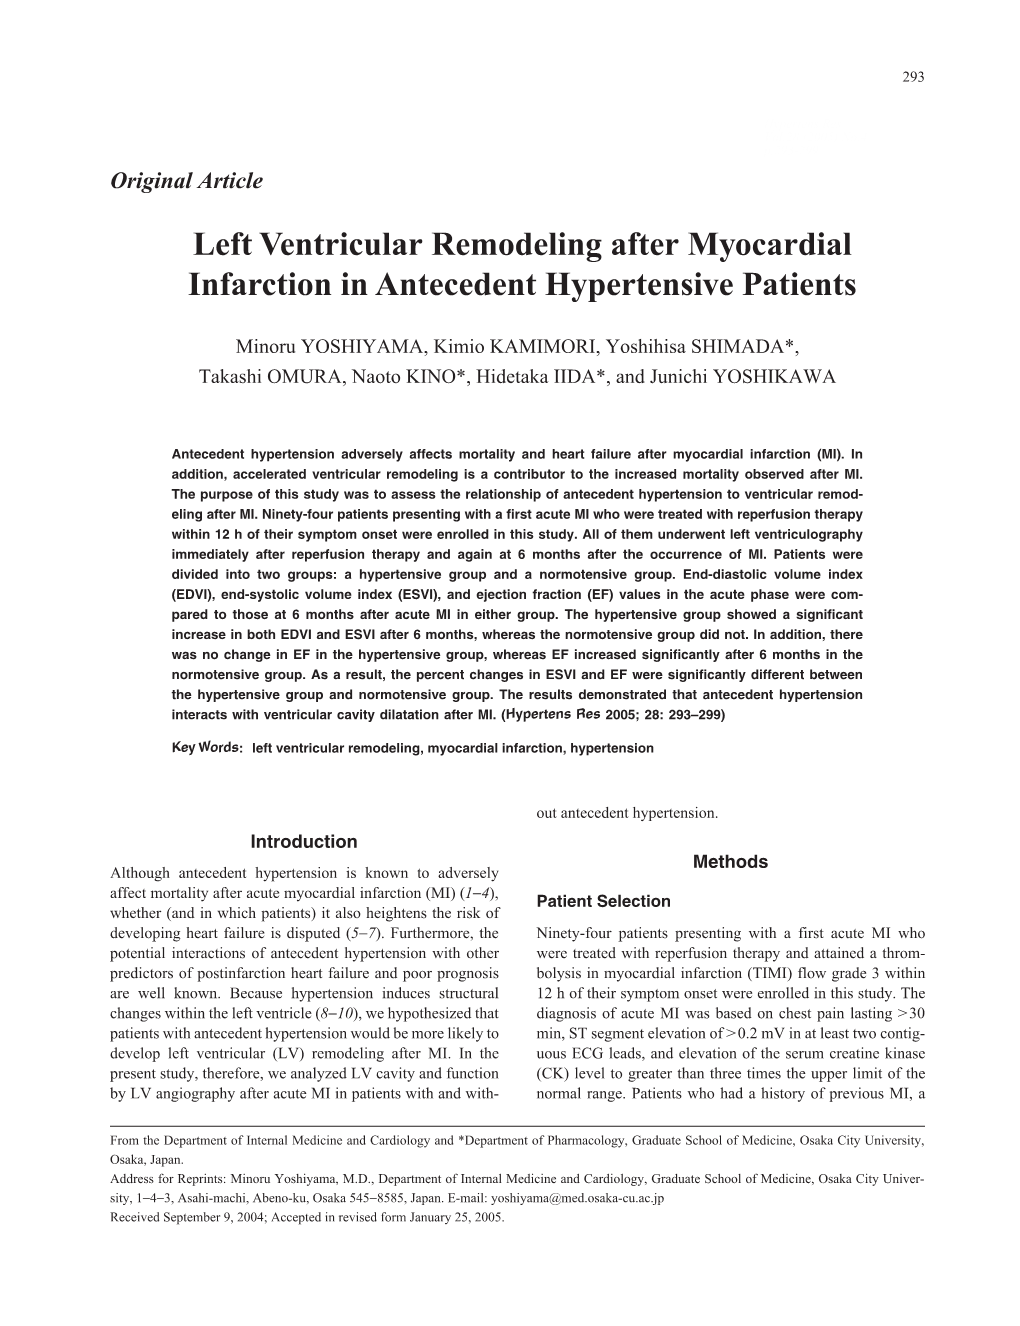 Left Ventricular Remodeling After Myocardial Infarction in Antecedent Hypertensive Patients